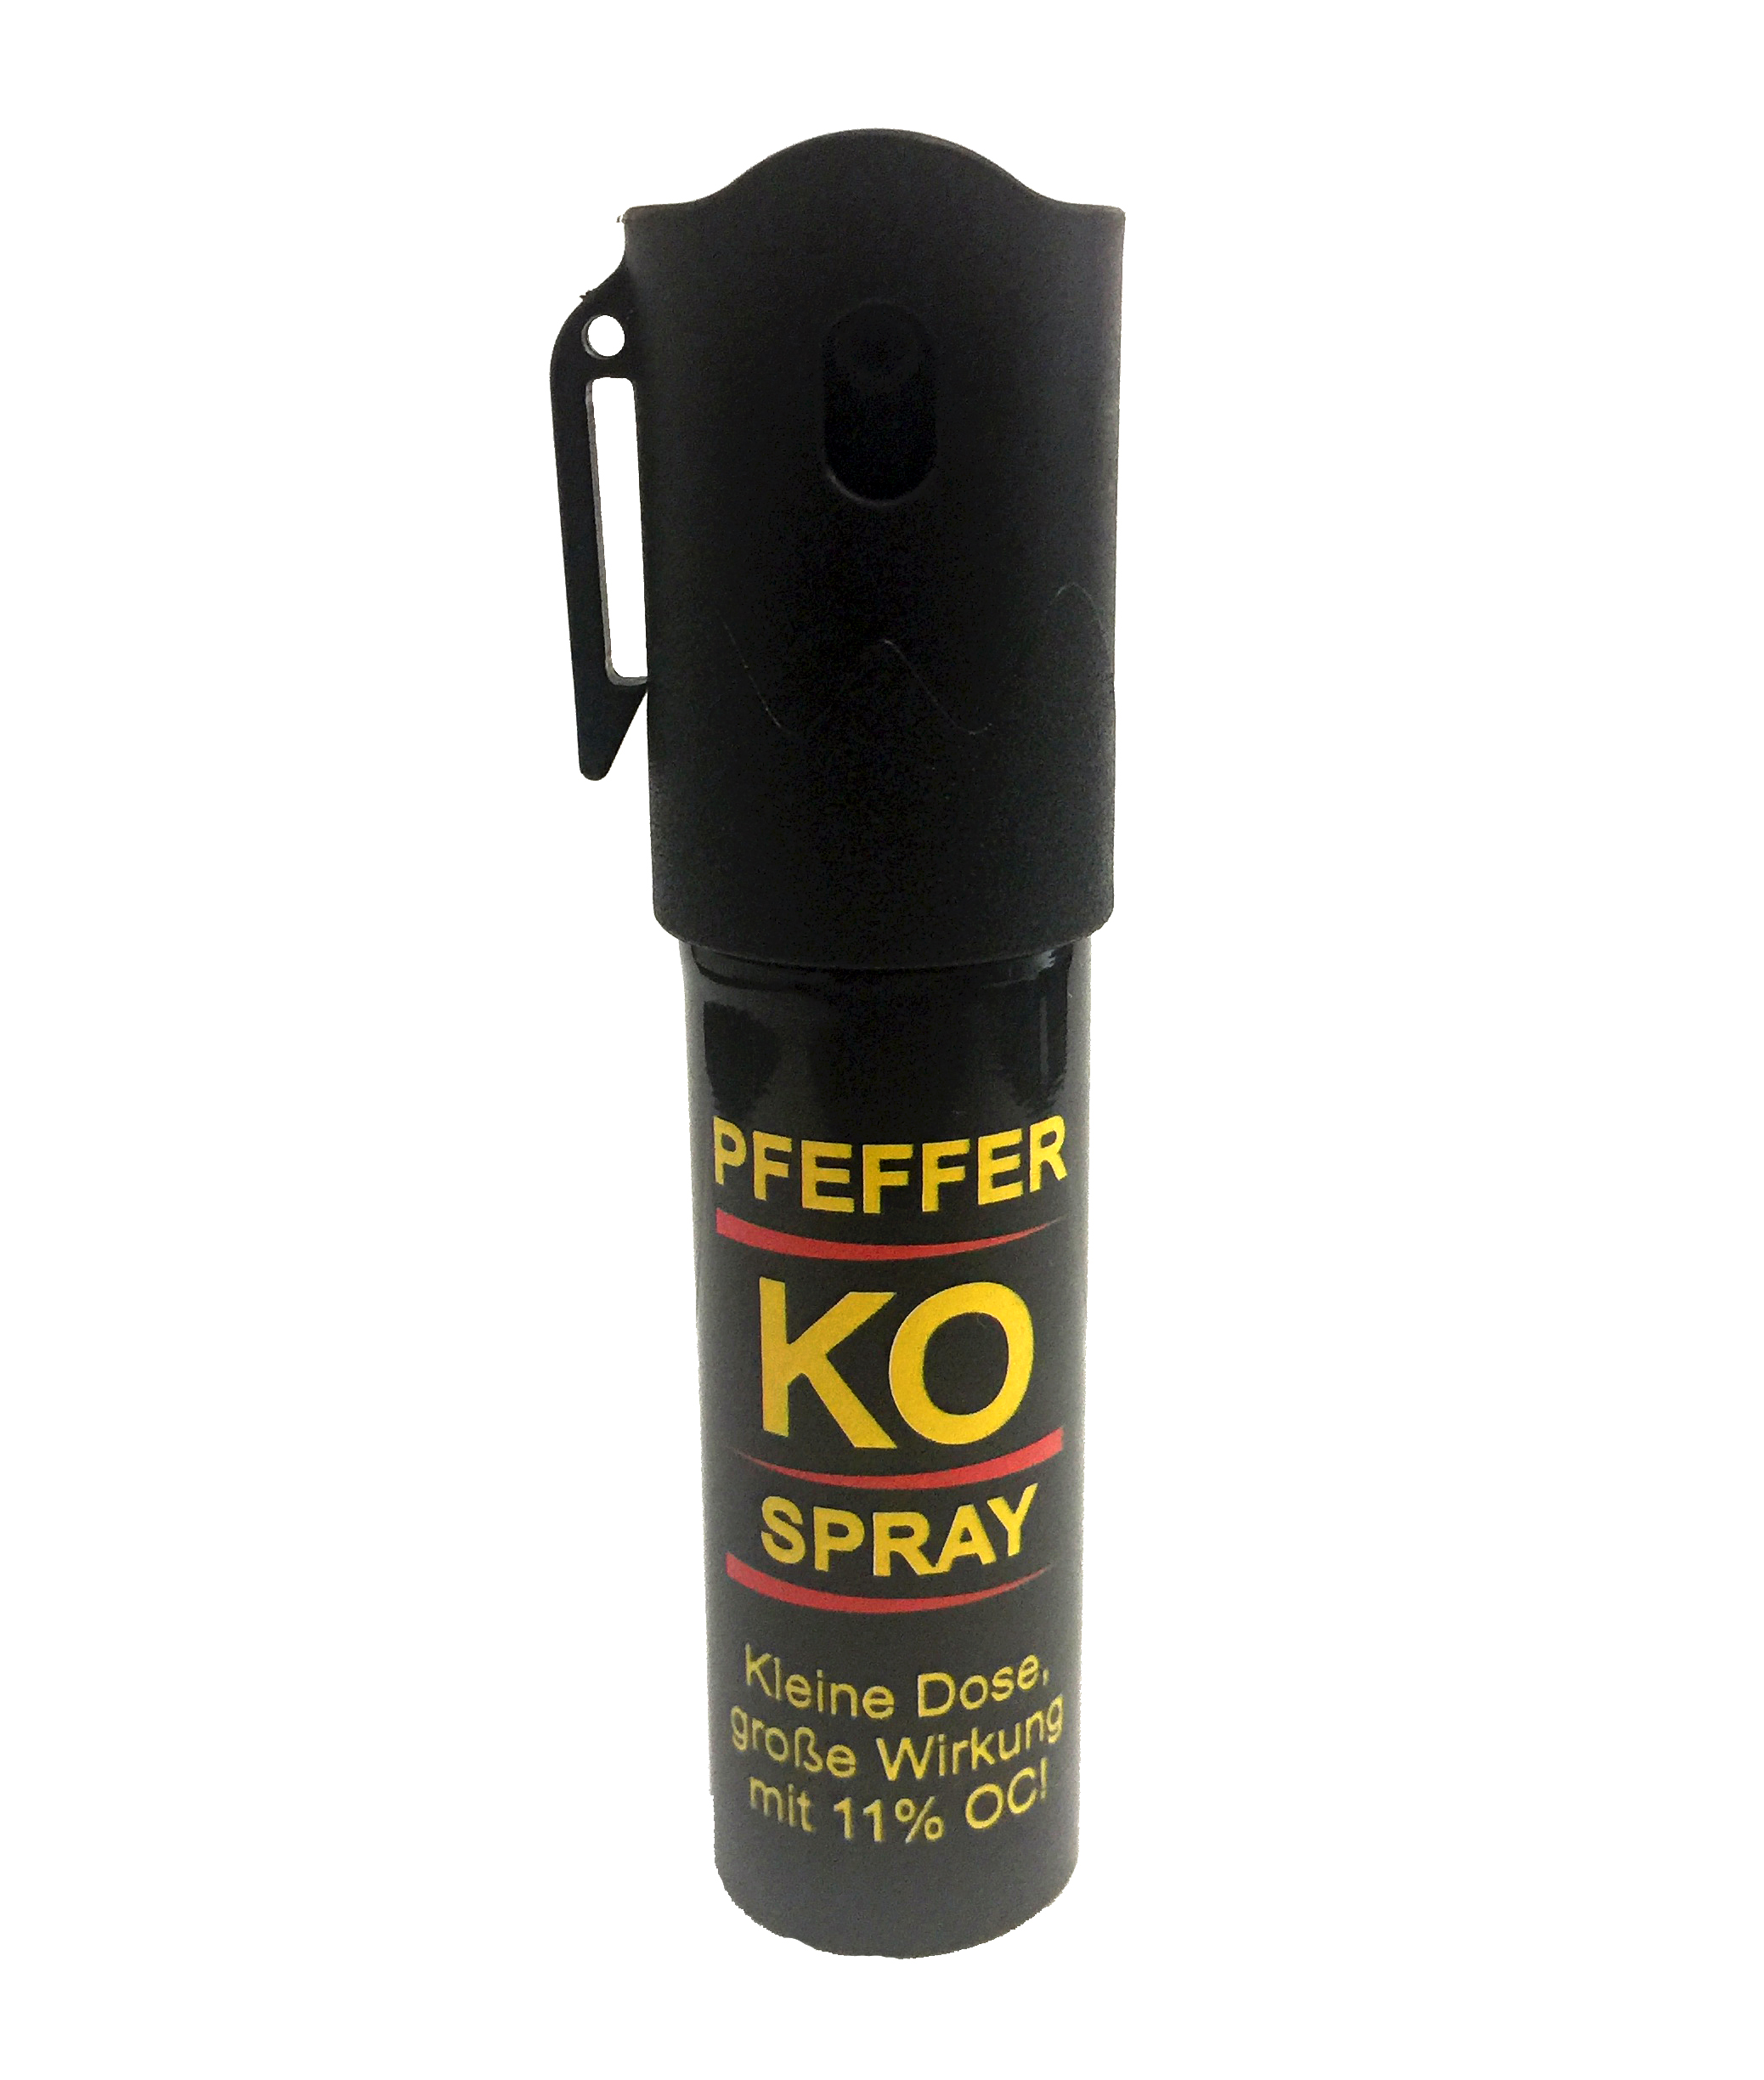 https://www.budokonzept.de/media/image/0c/66/68/pfeffer-ko-spray-15-ml-tierabwehrspray-slim-530-00eur-1l-572-106.jpg